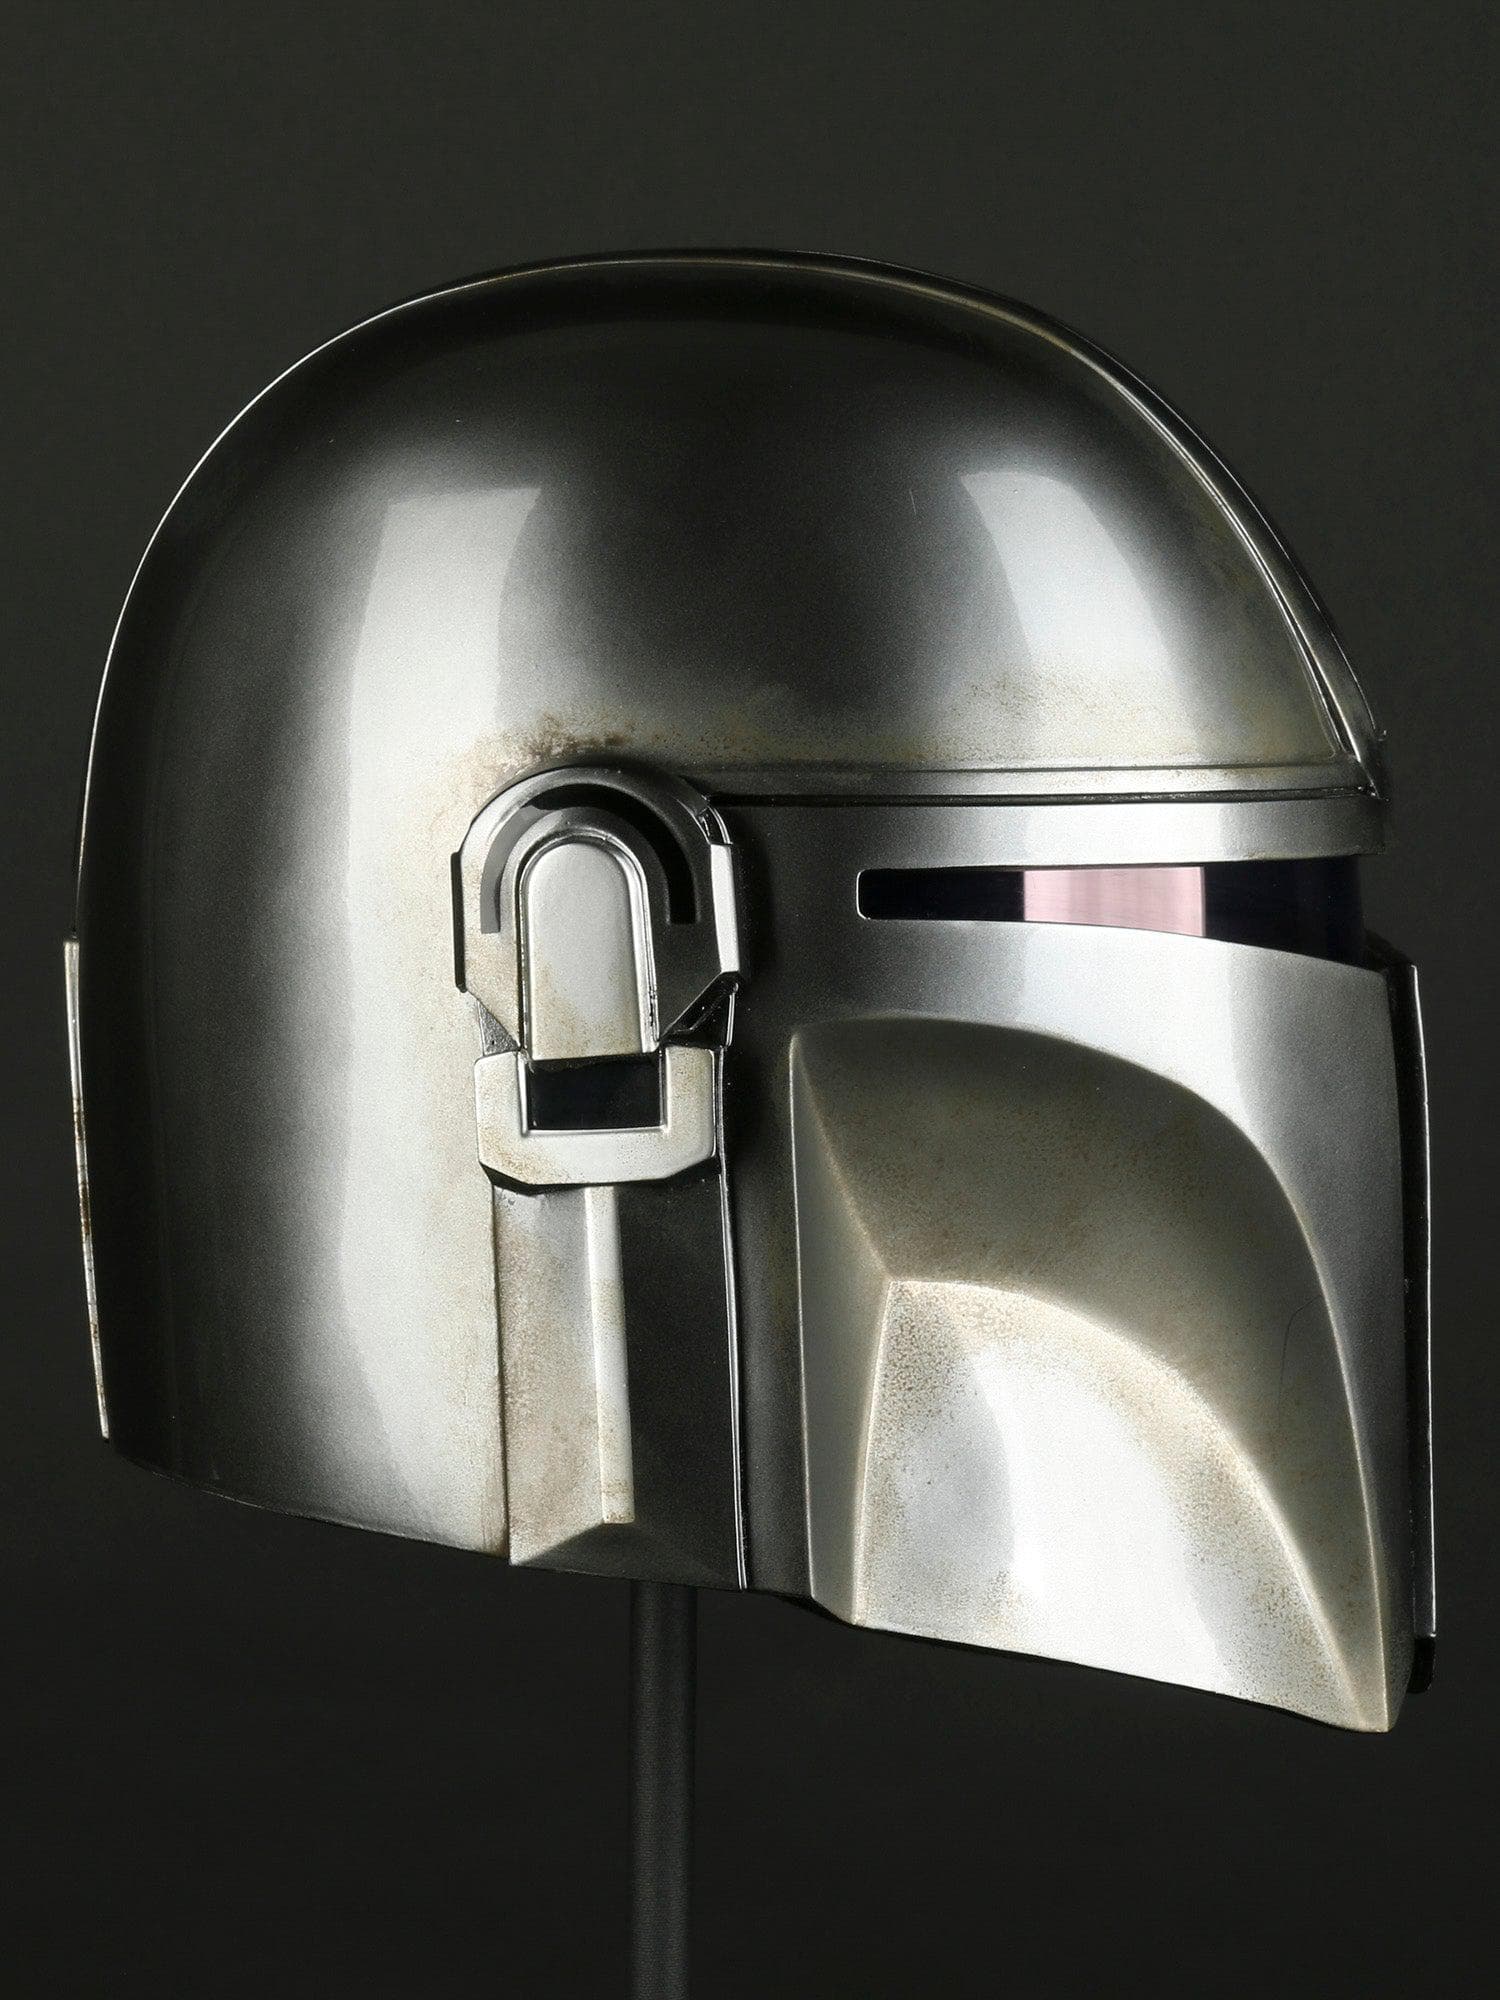 Denuo Novo Star Wars The Mandalorian Helmet Accessory - costumes.com